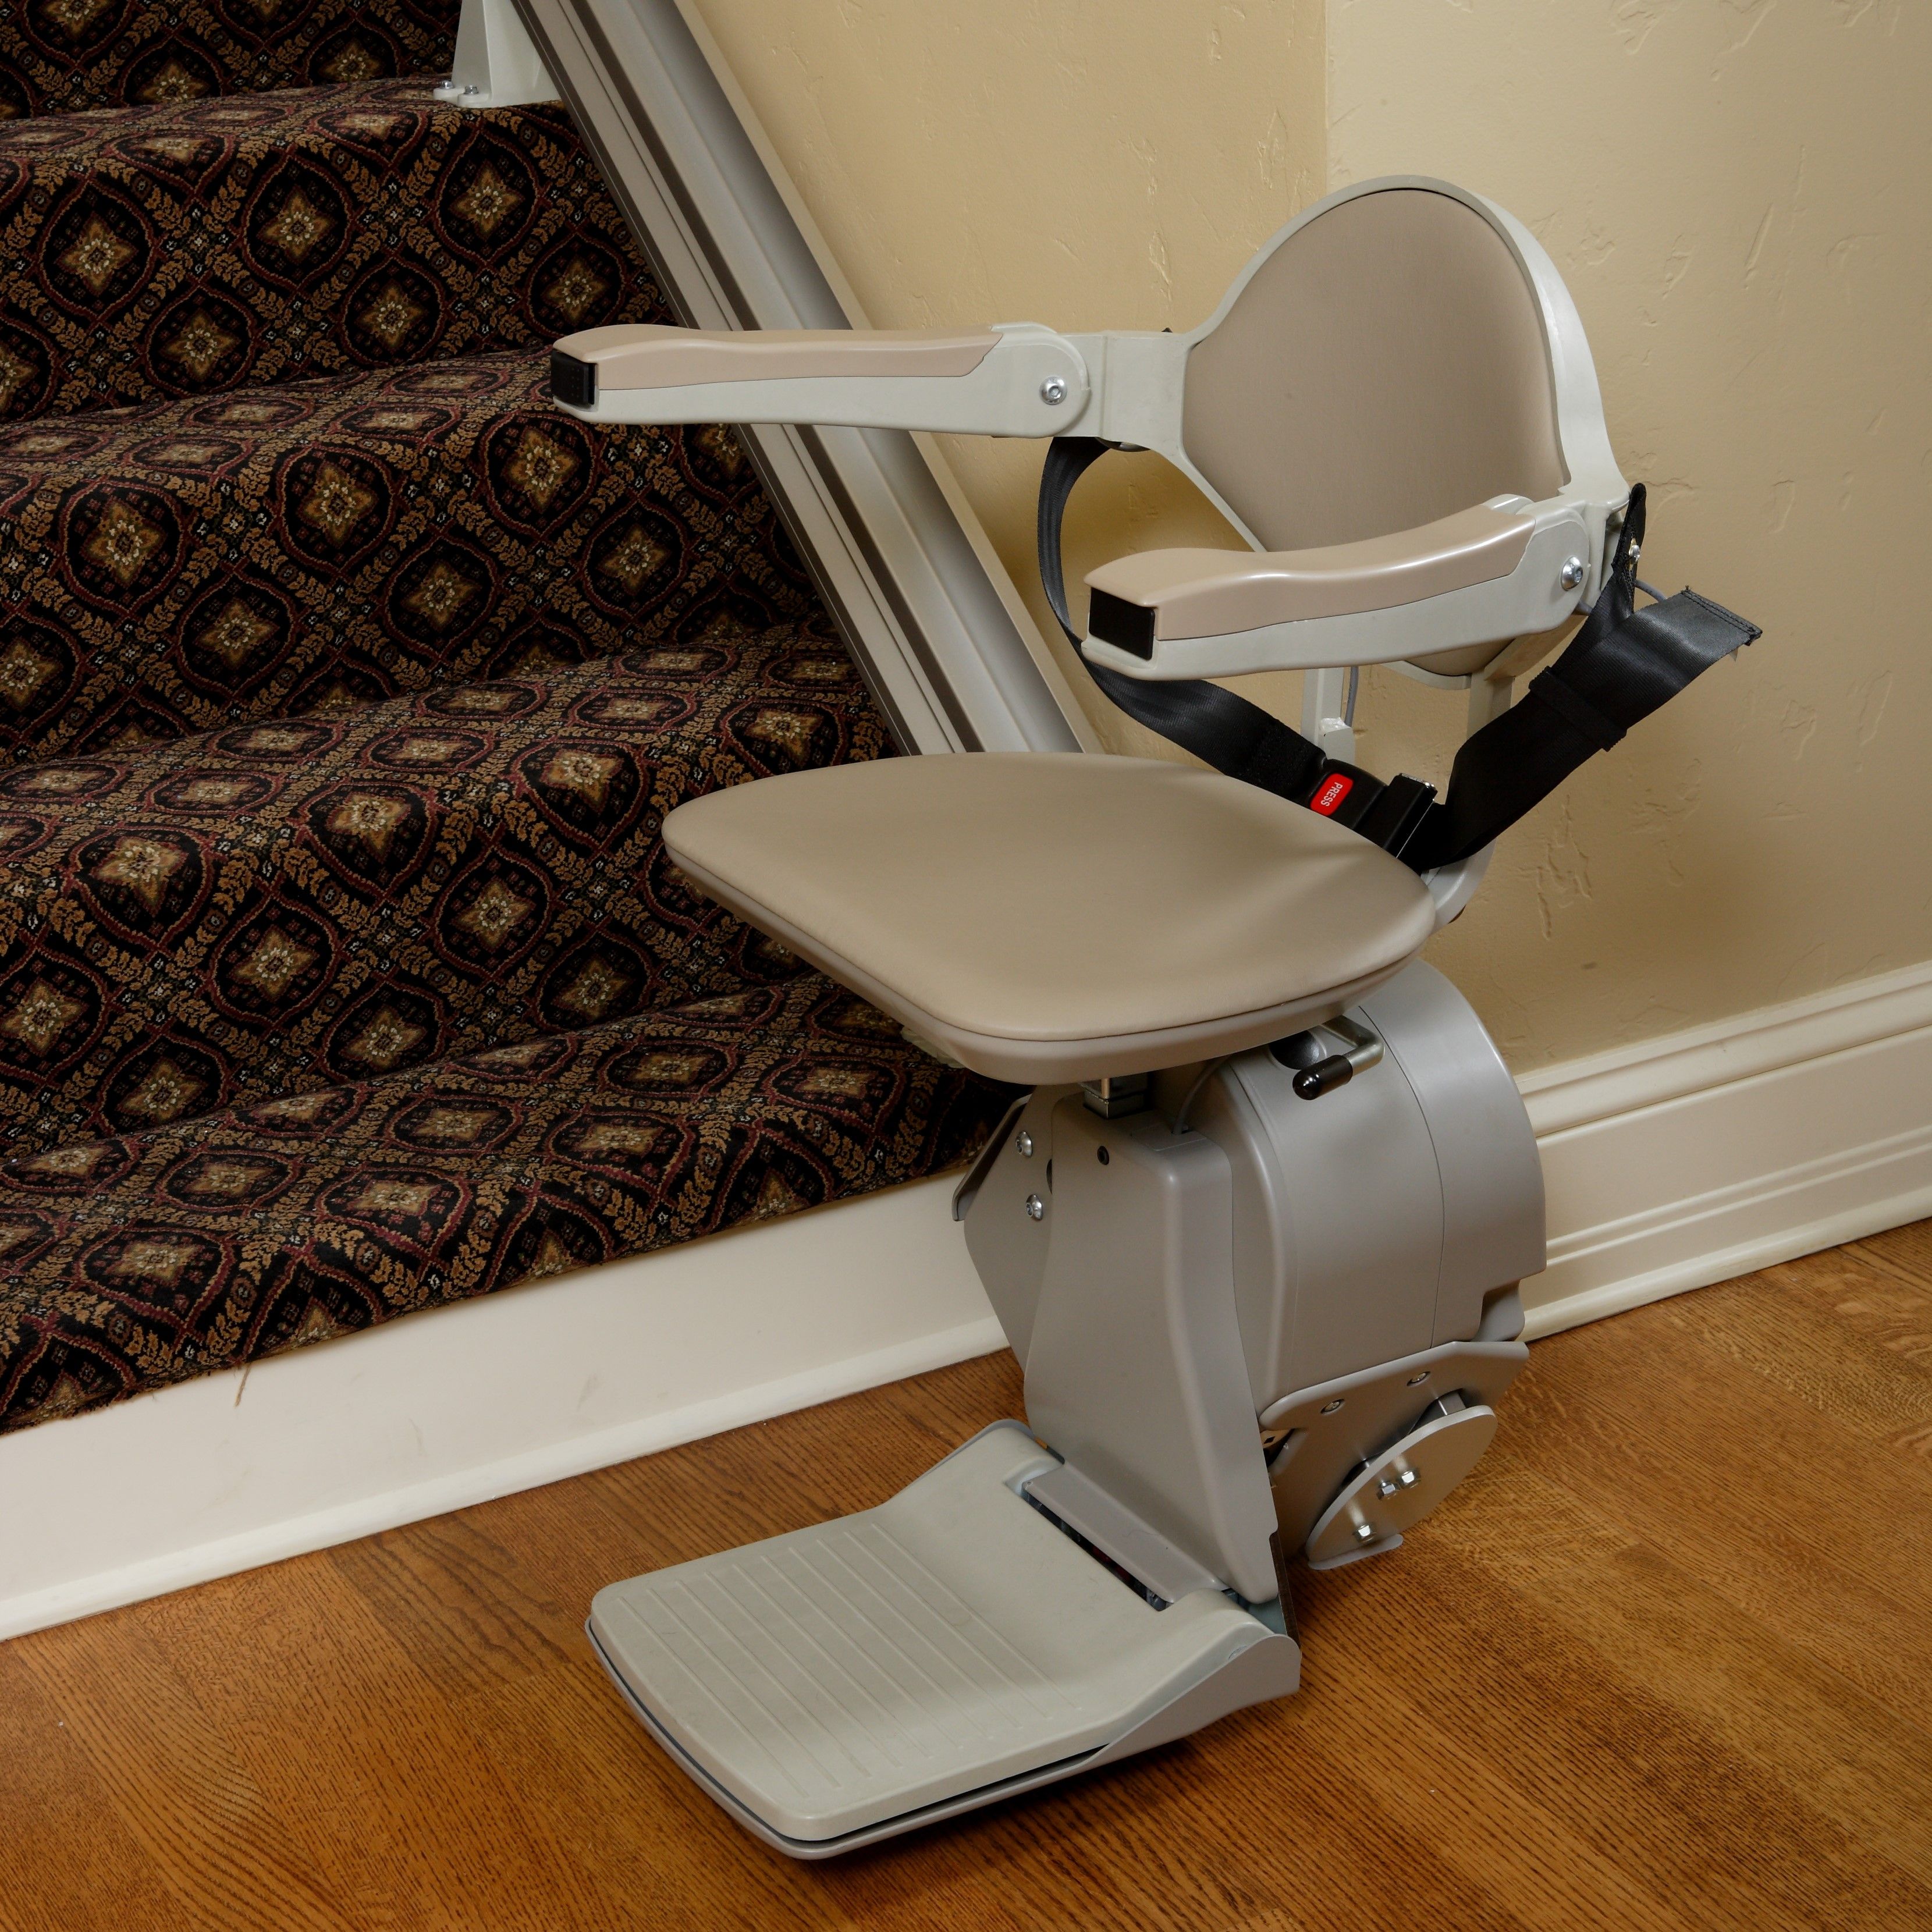 stairlift San Jose ca indoor home residential straight rail chairlift for elderly